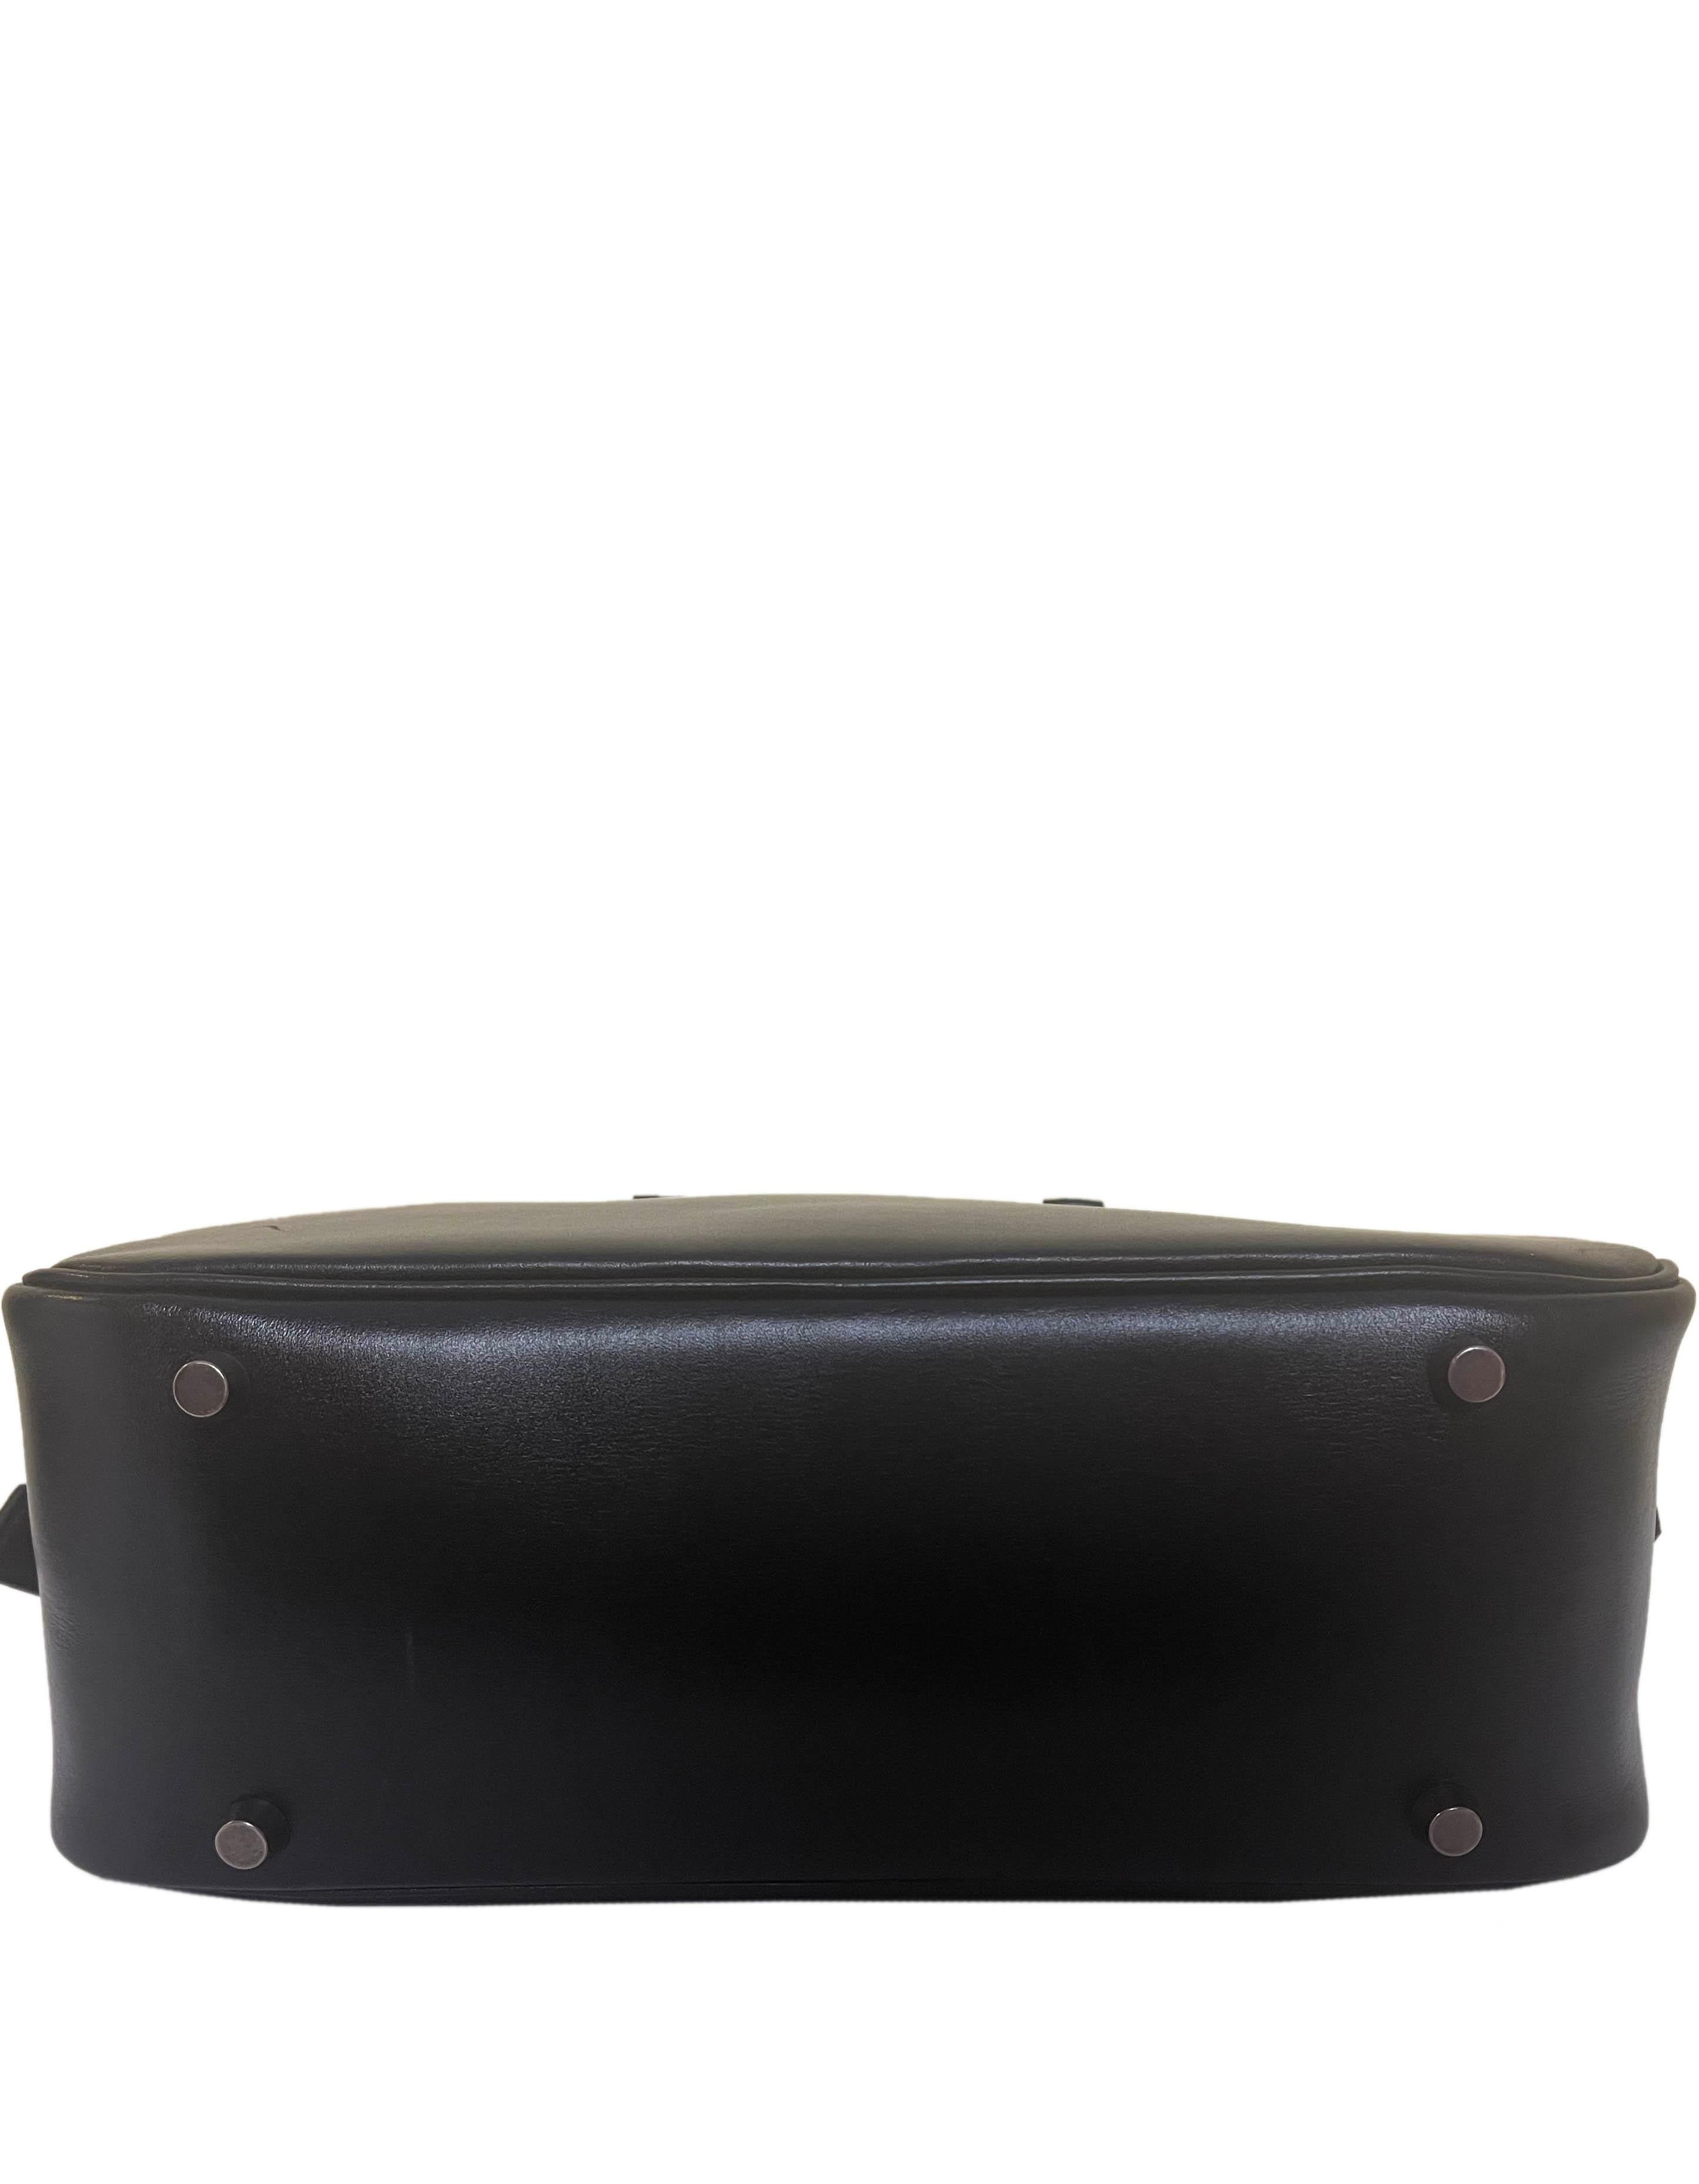 Hermes Black Box Leather 28cm Plume Bag 1